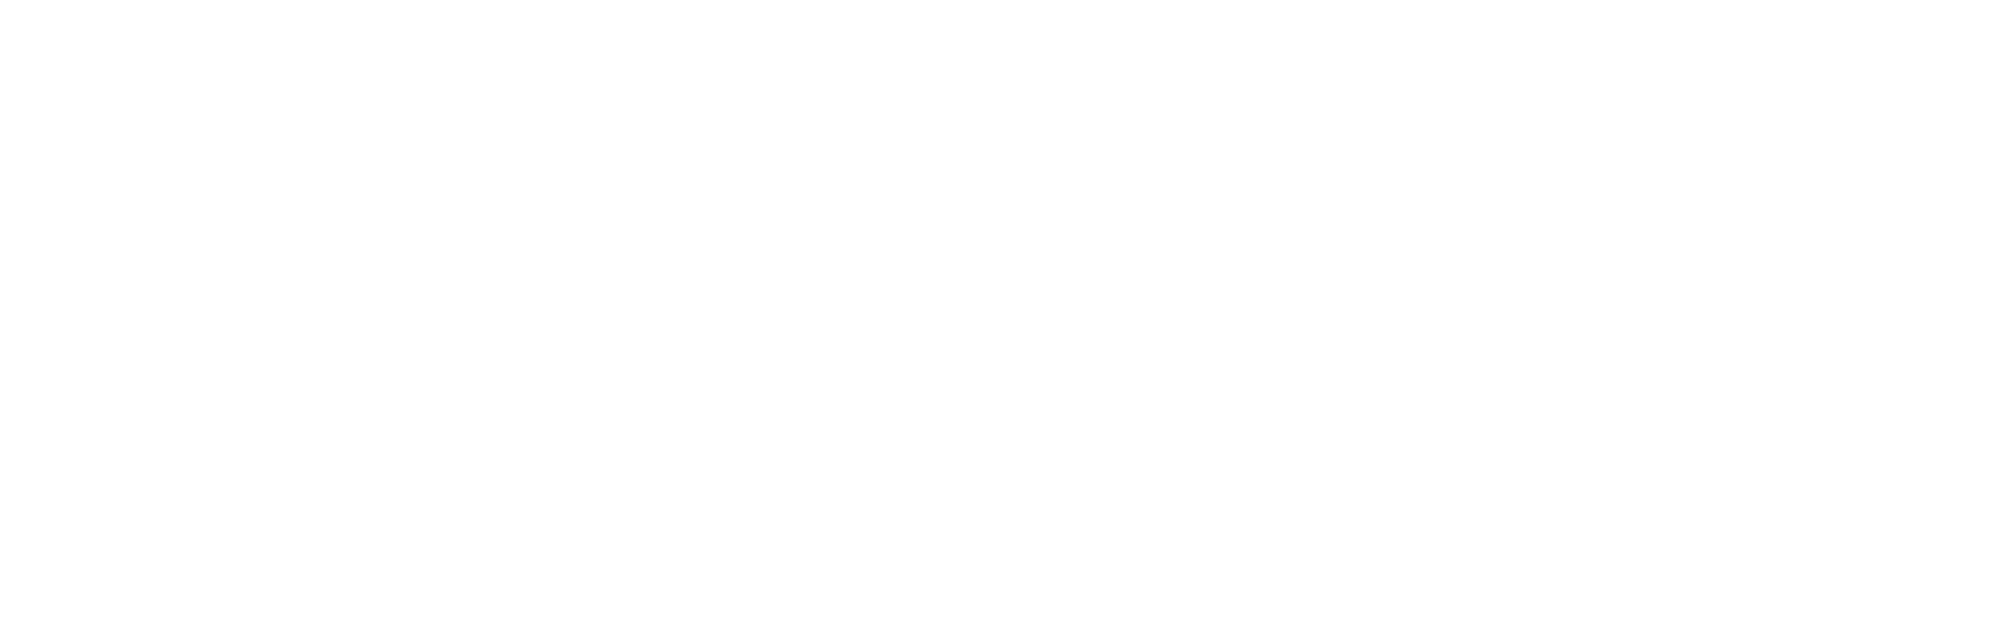 Logo WRS white